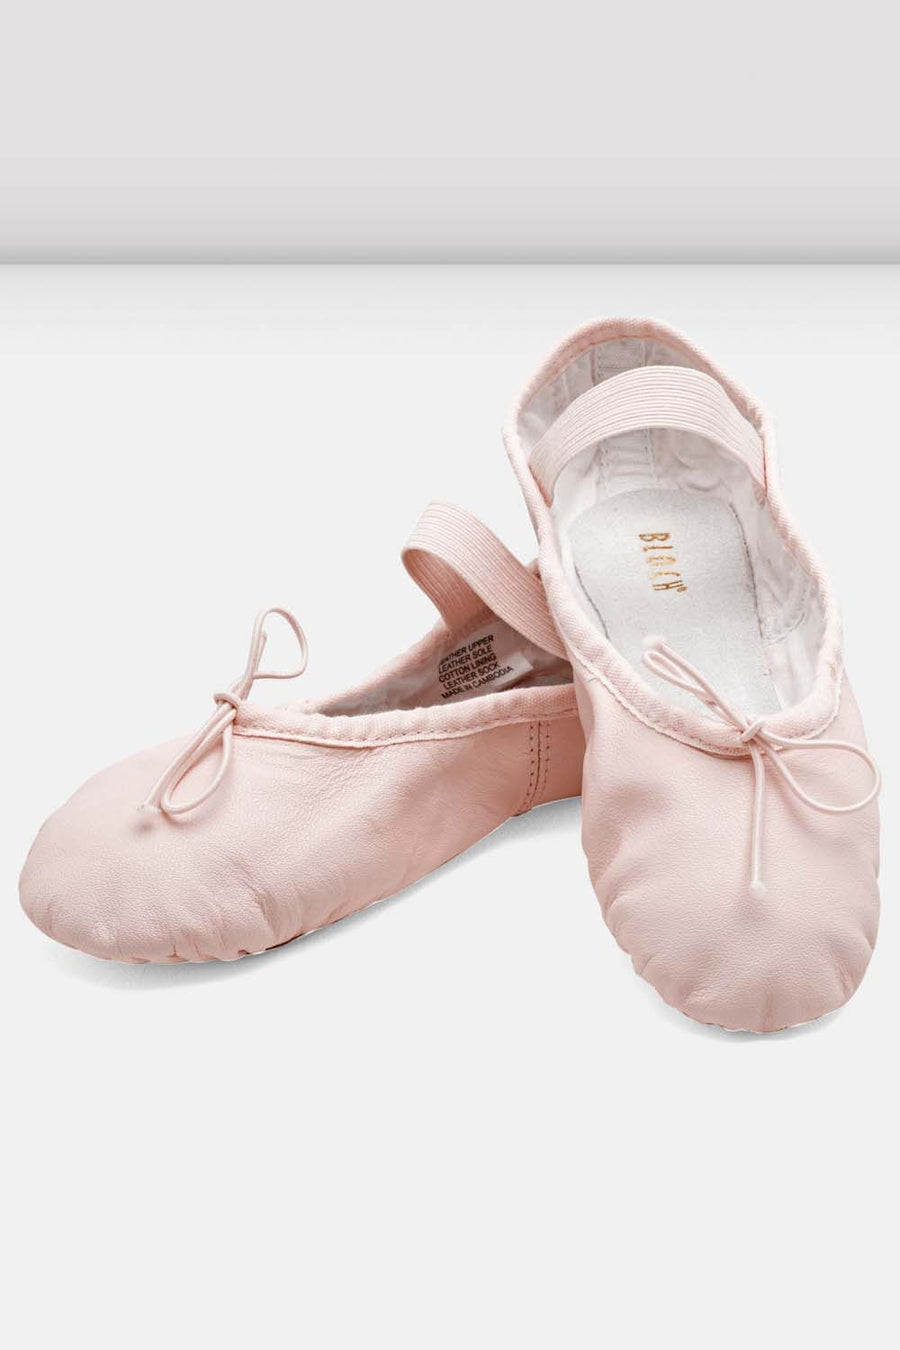 Bloch Child Dansoft Pink Leather Ballet Shoes